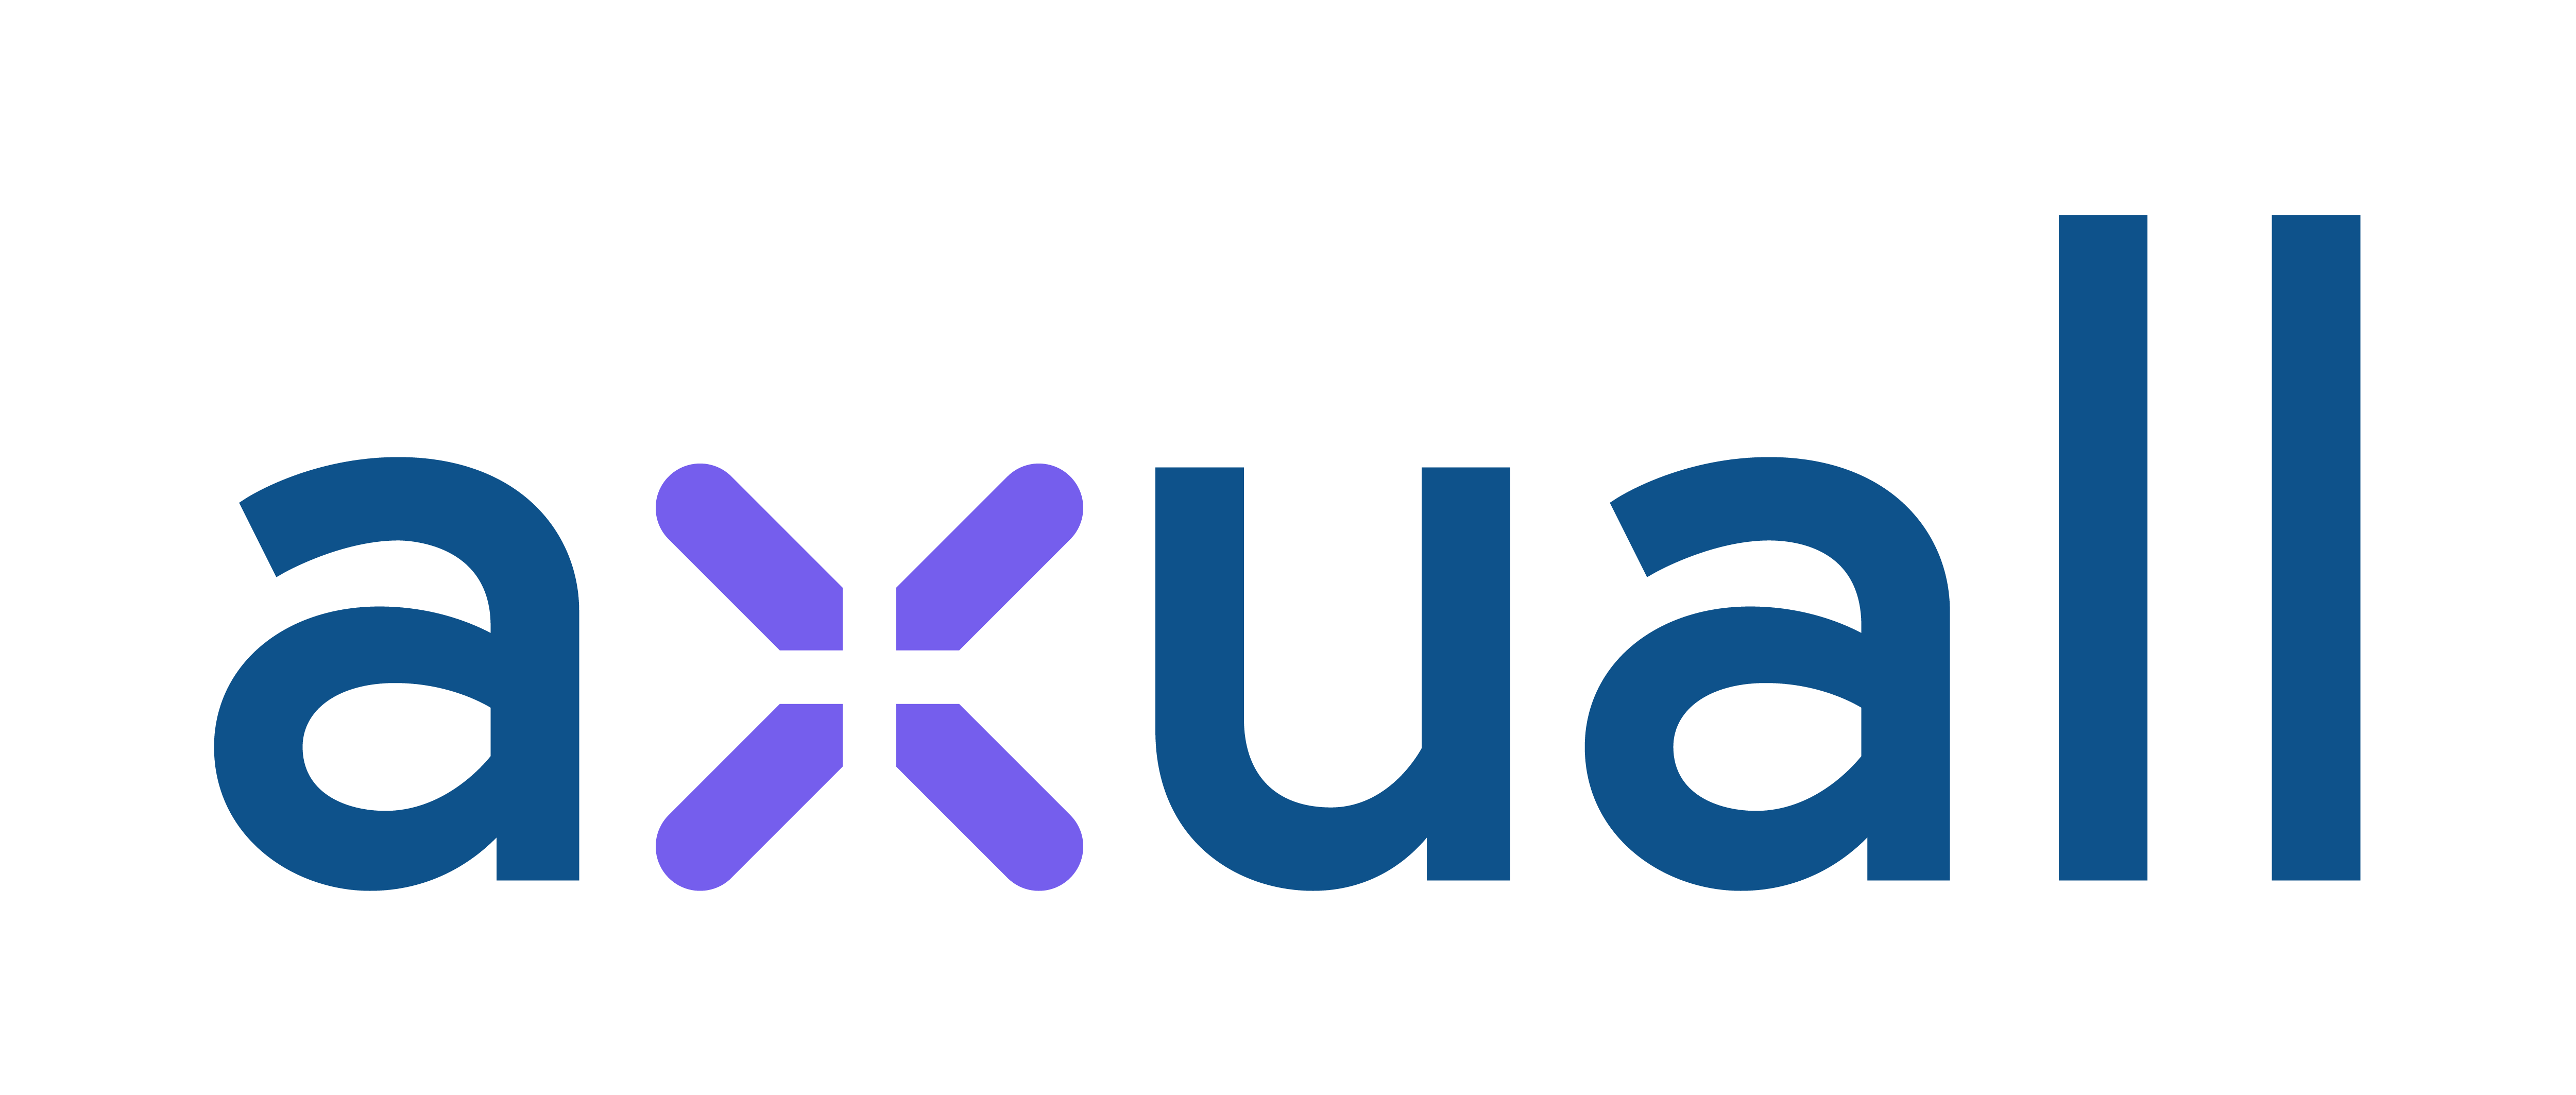 Axuall Logo.png